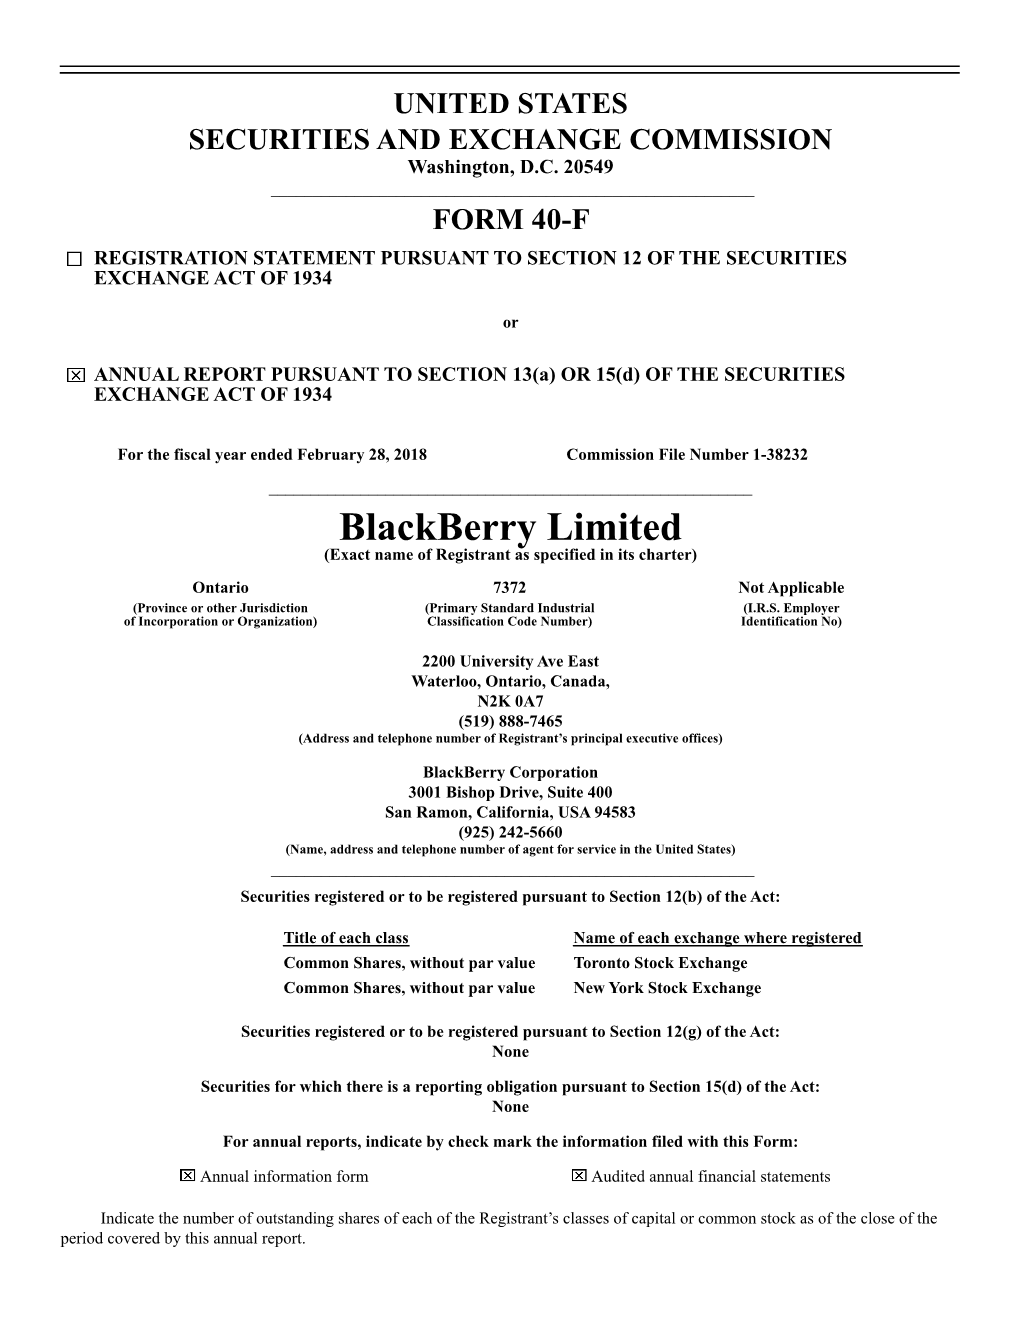 Blackberry Limited